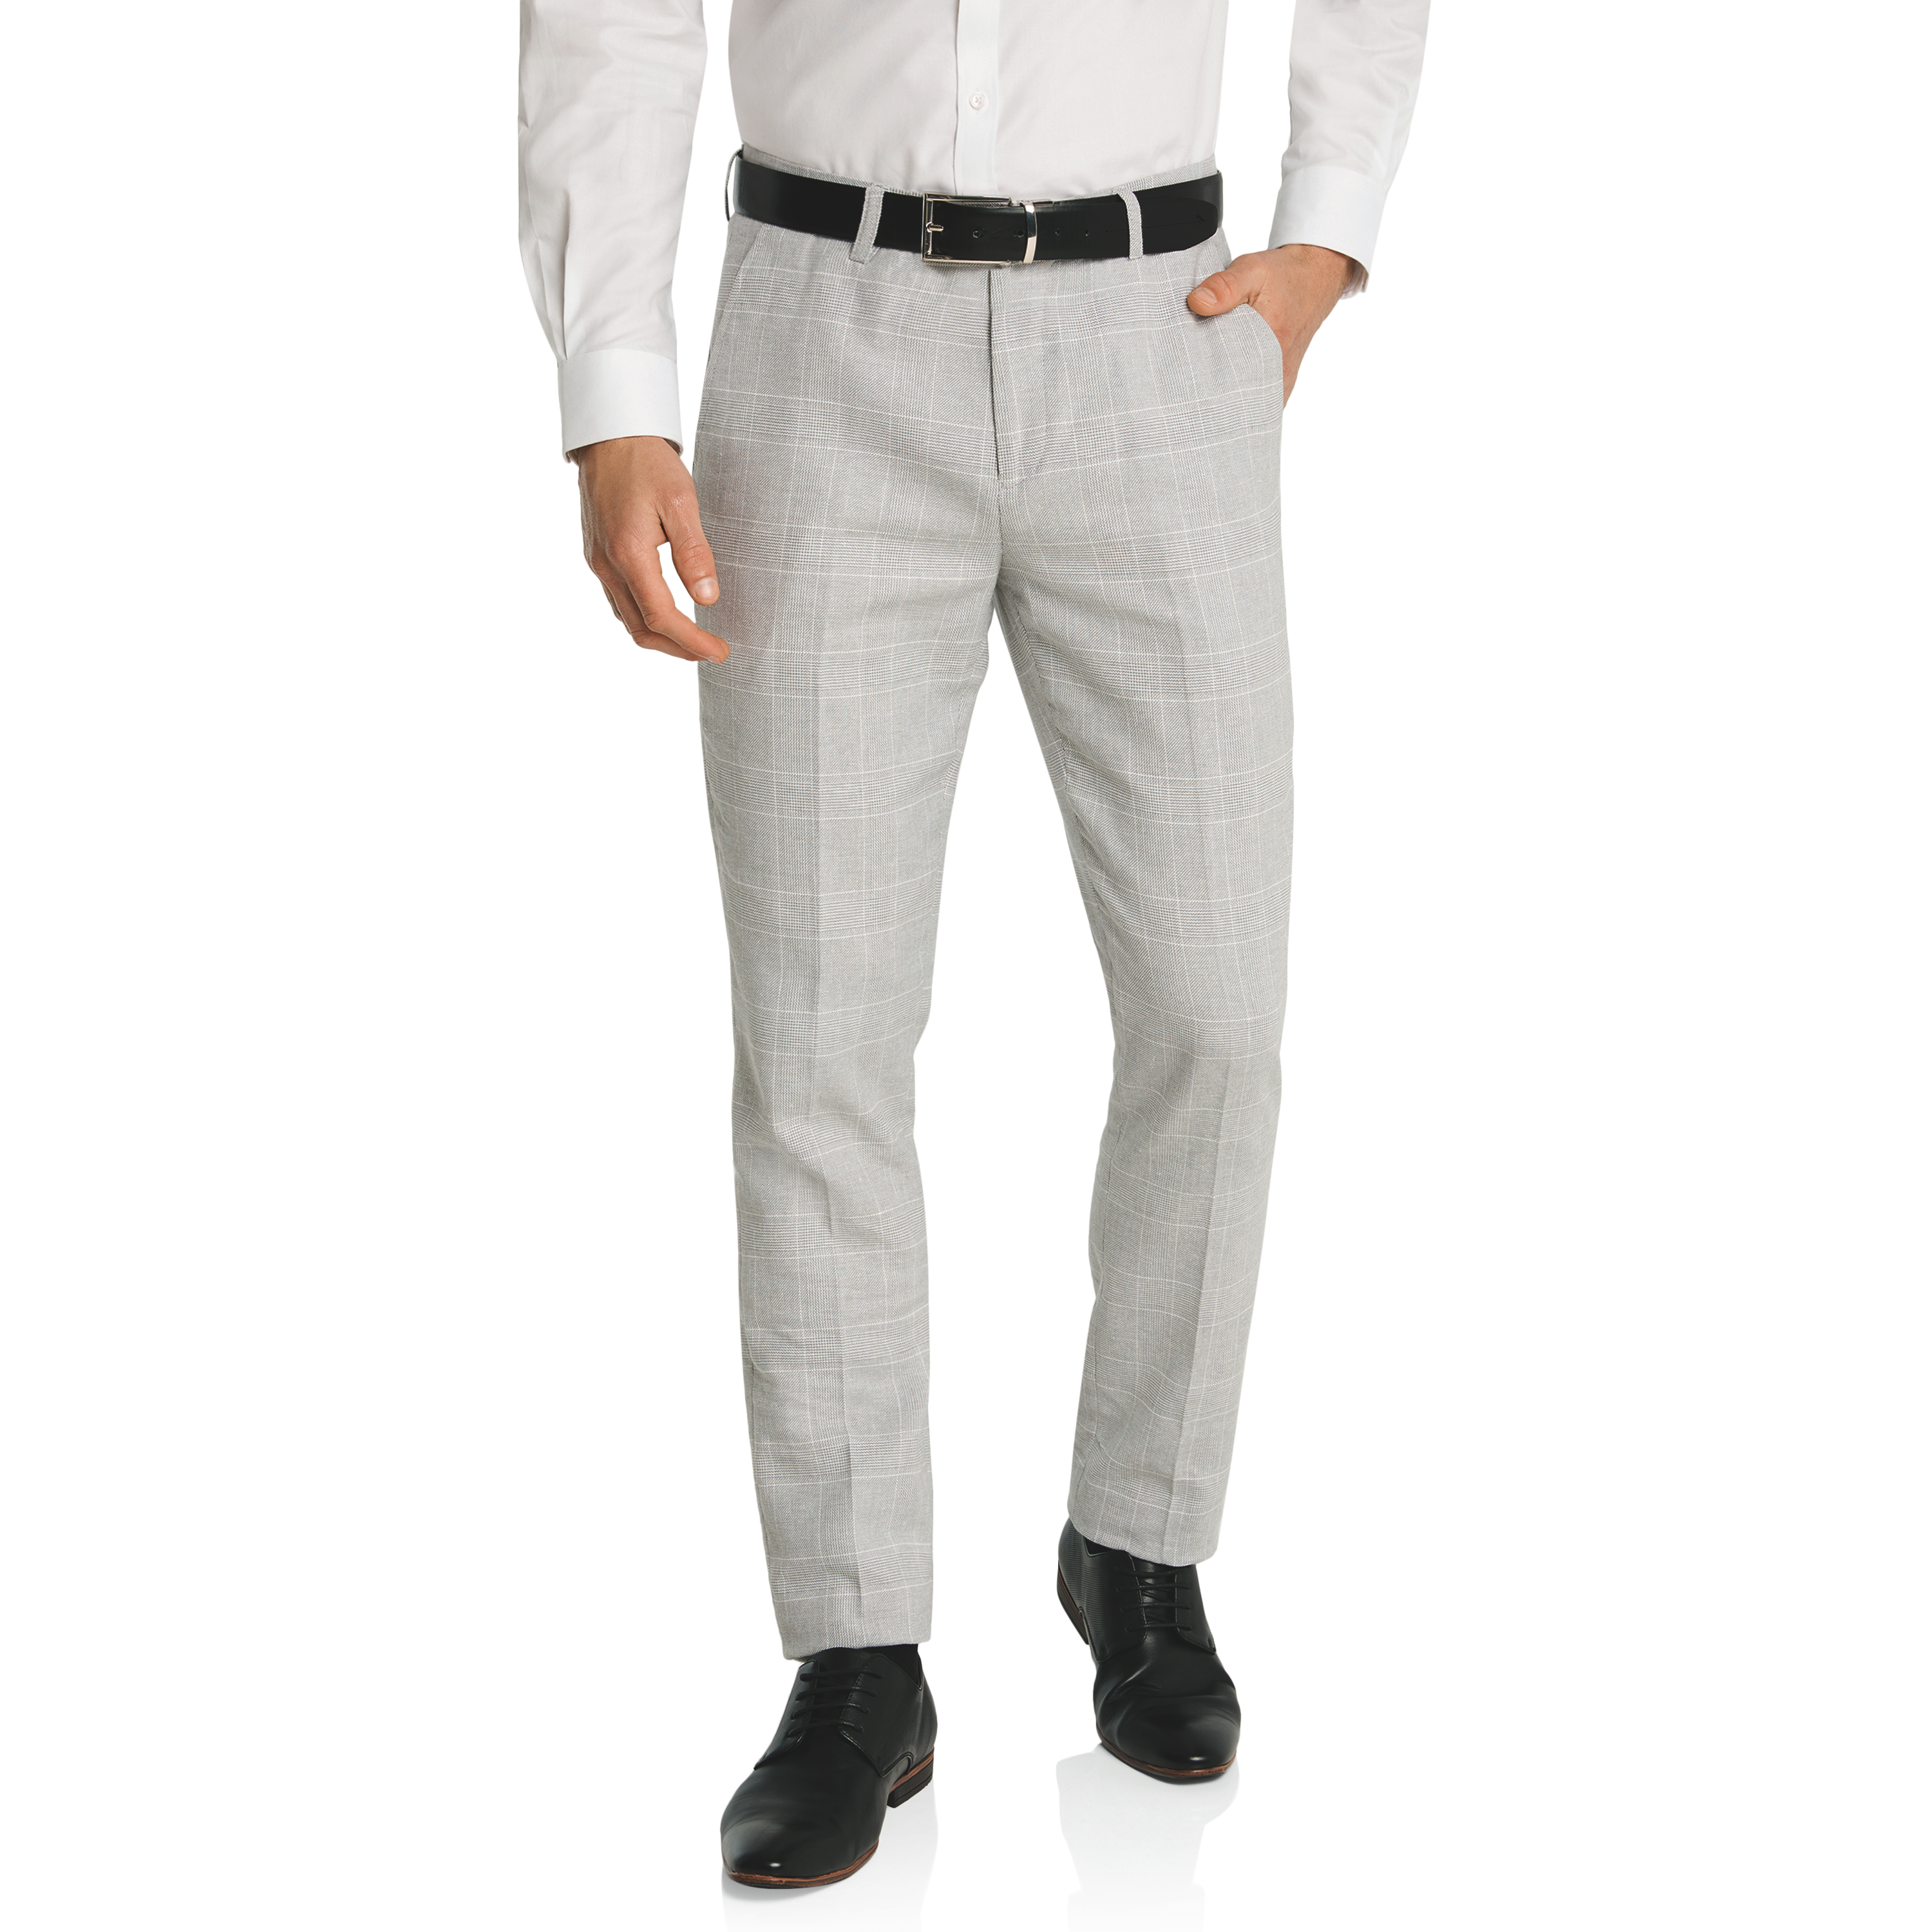 Top Grey Shirt Matching Pant Colour Combinations